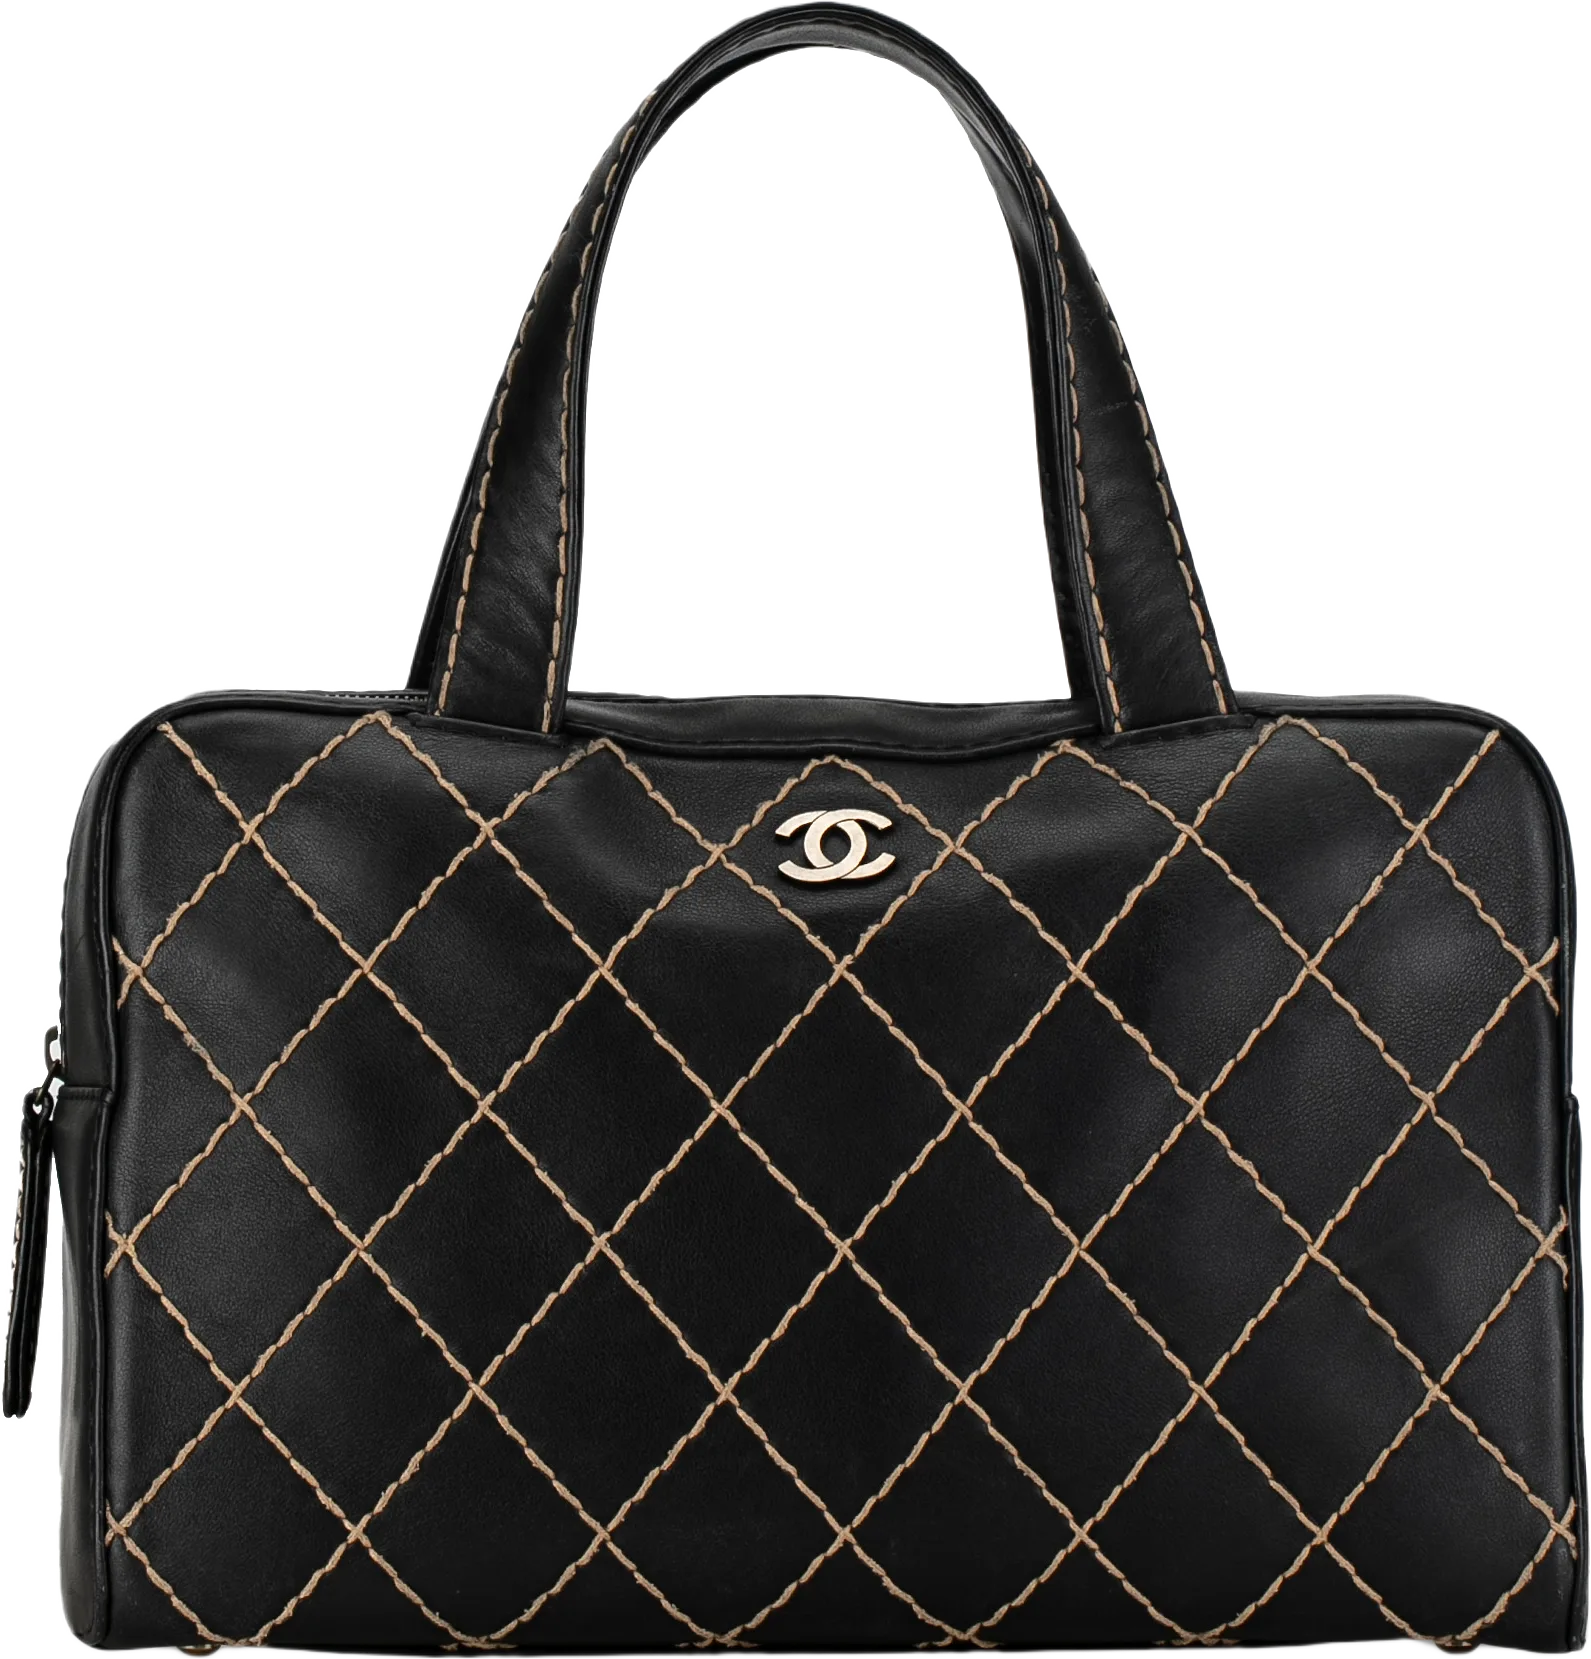 Chanel Cc Wild Stitch Lambskin Handbag